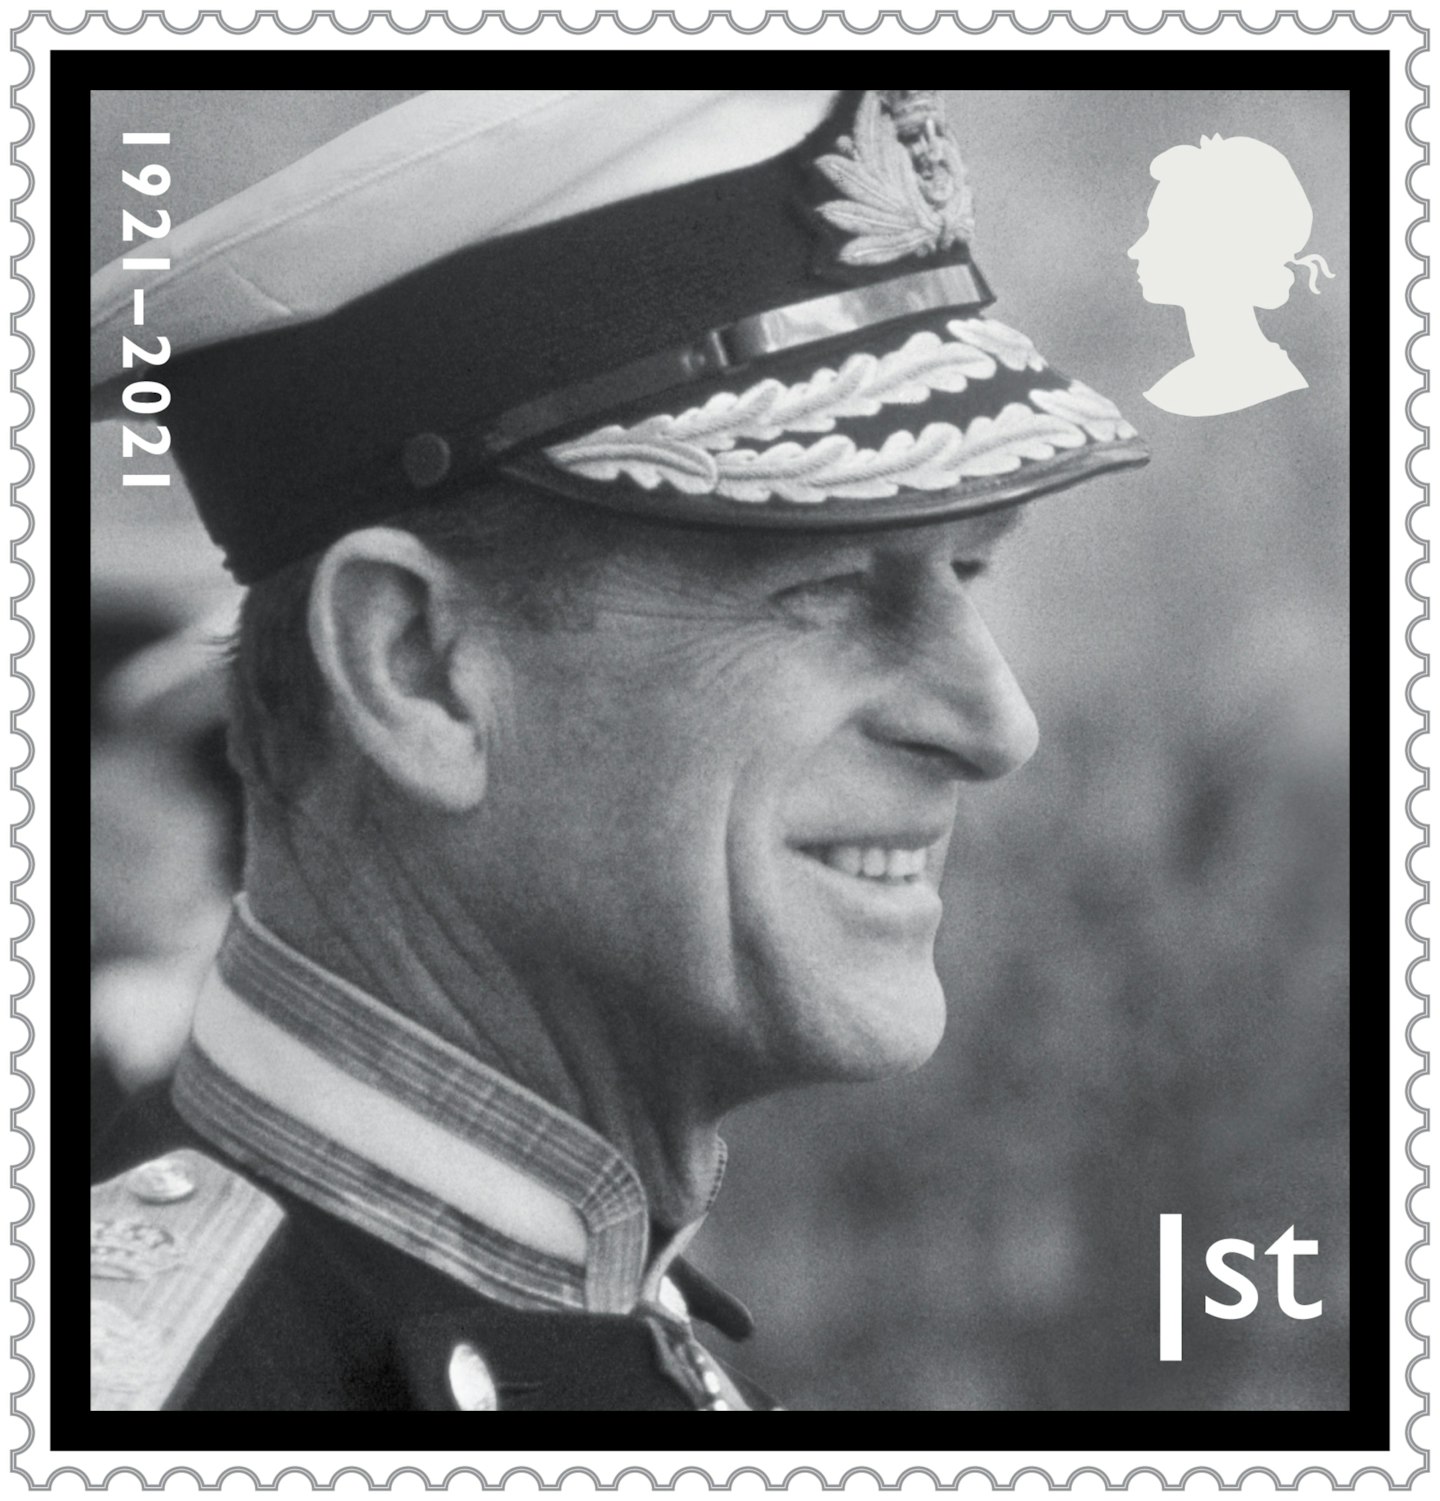 1st class stamp 